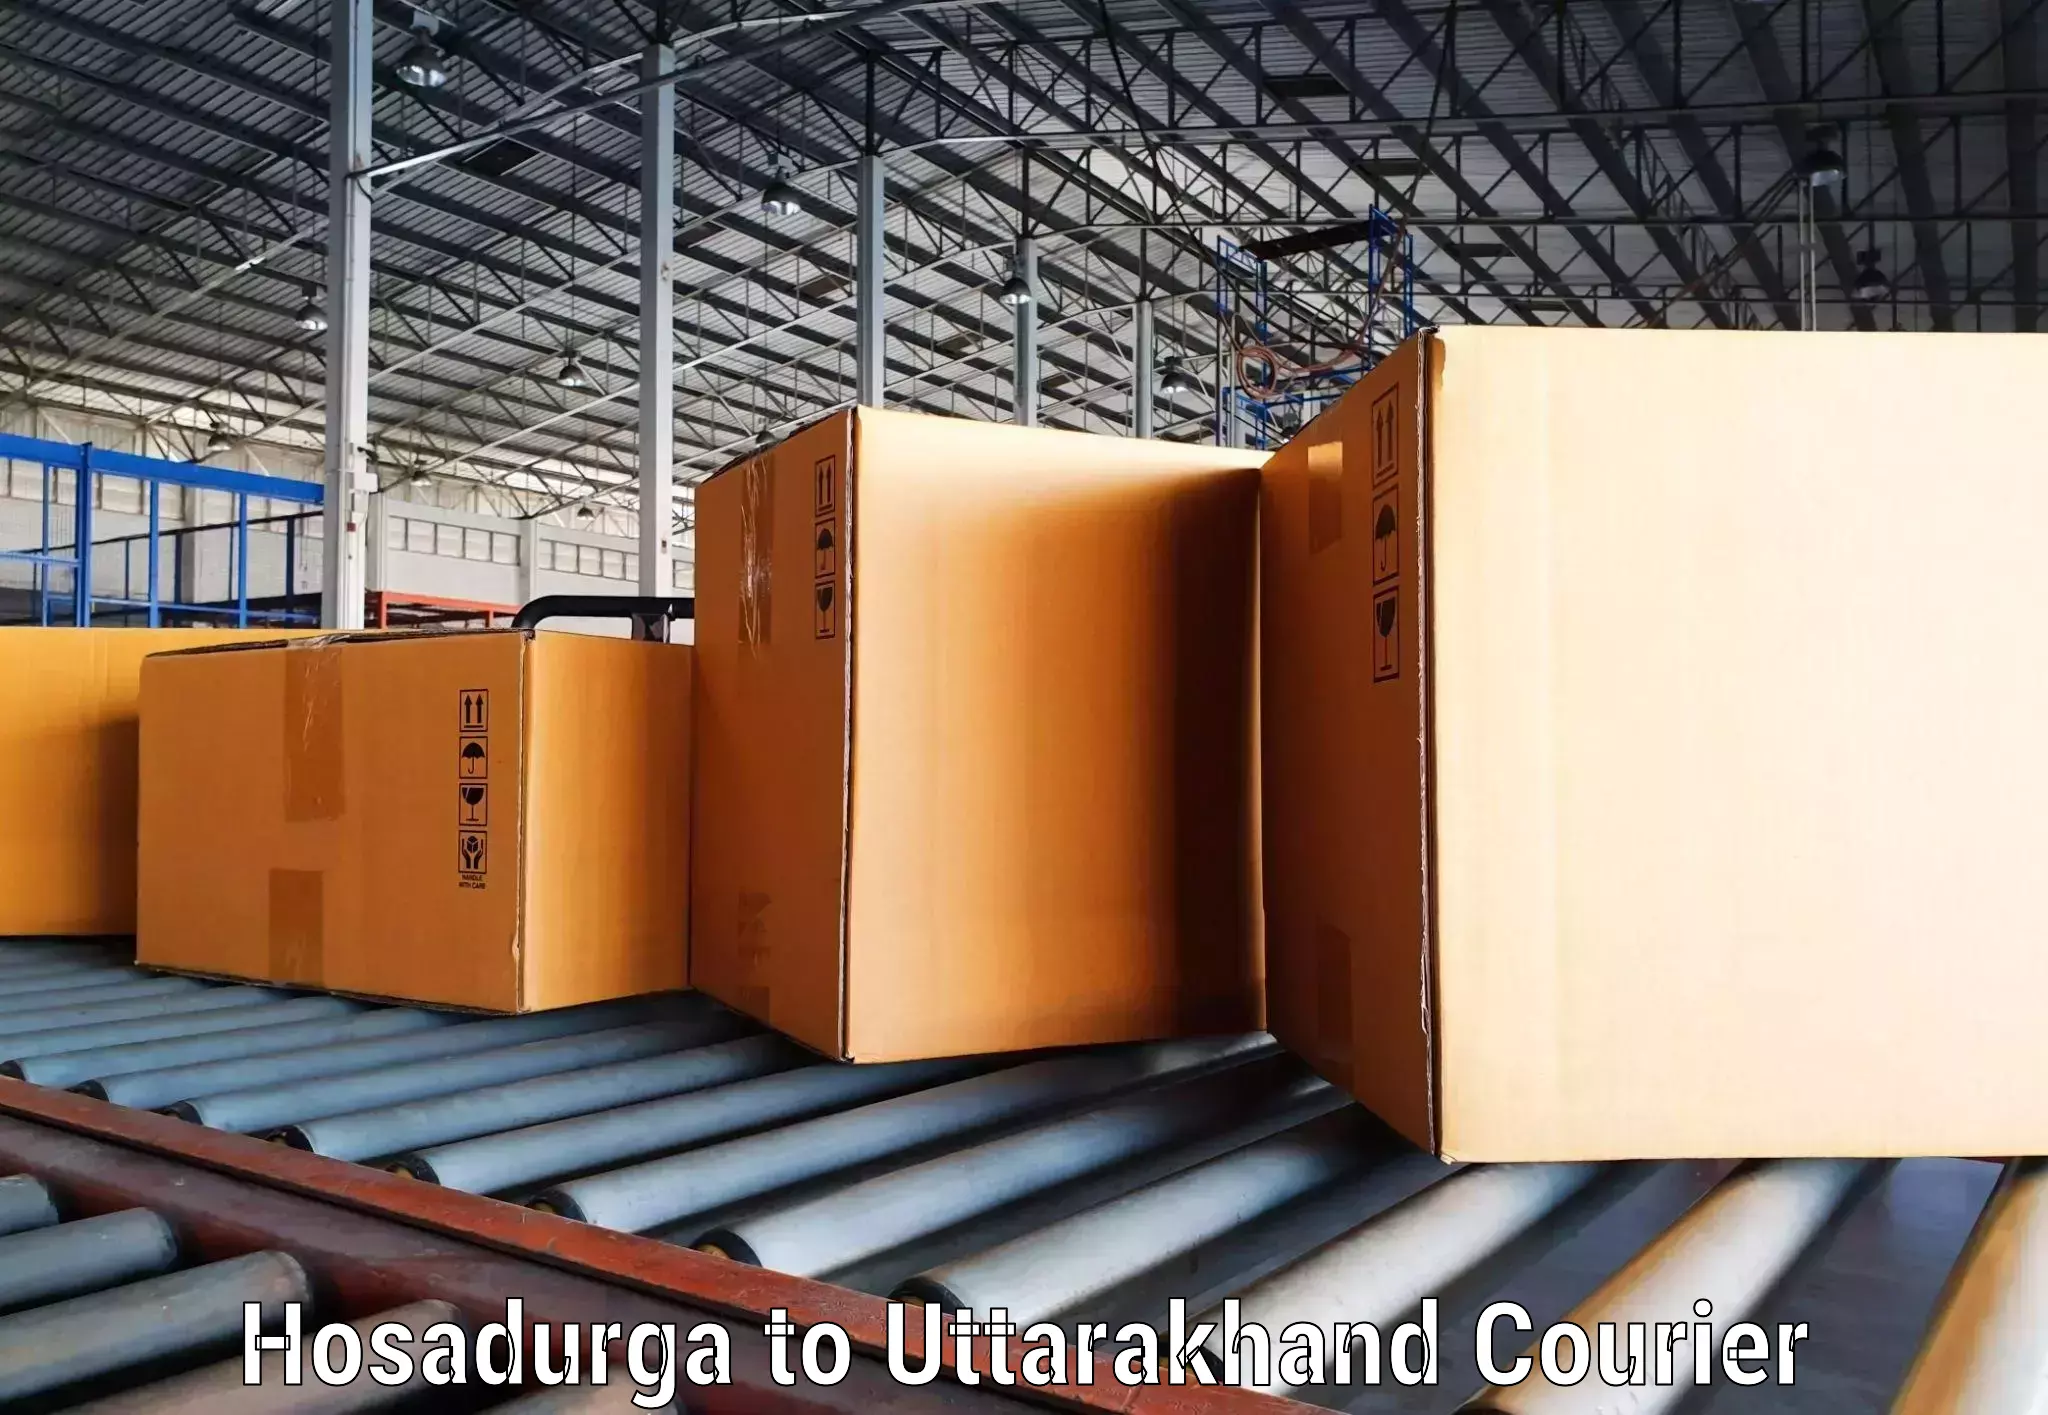 Digital courier platforms in Hosadurga to IIT Roorkee